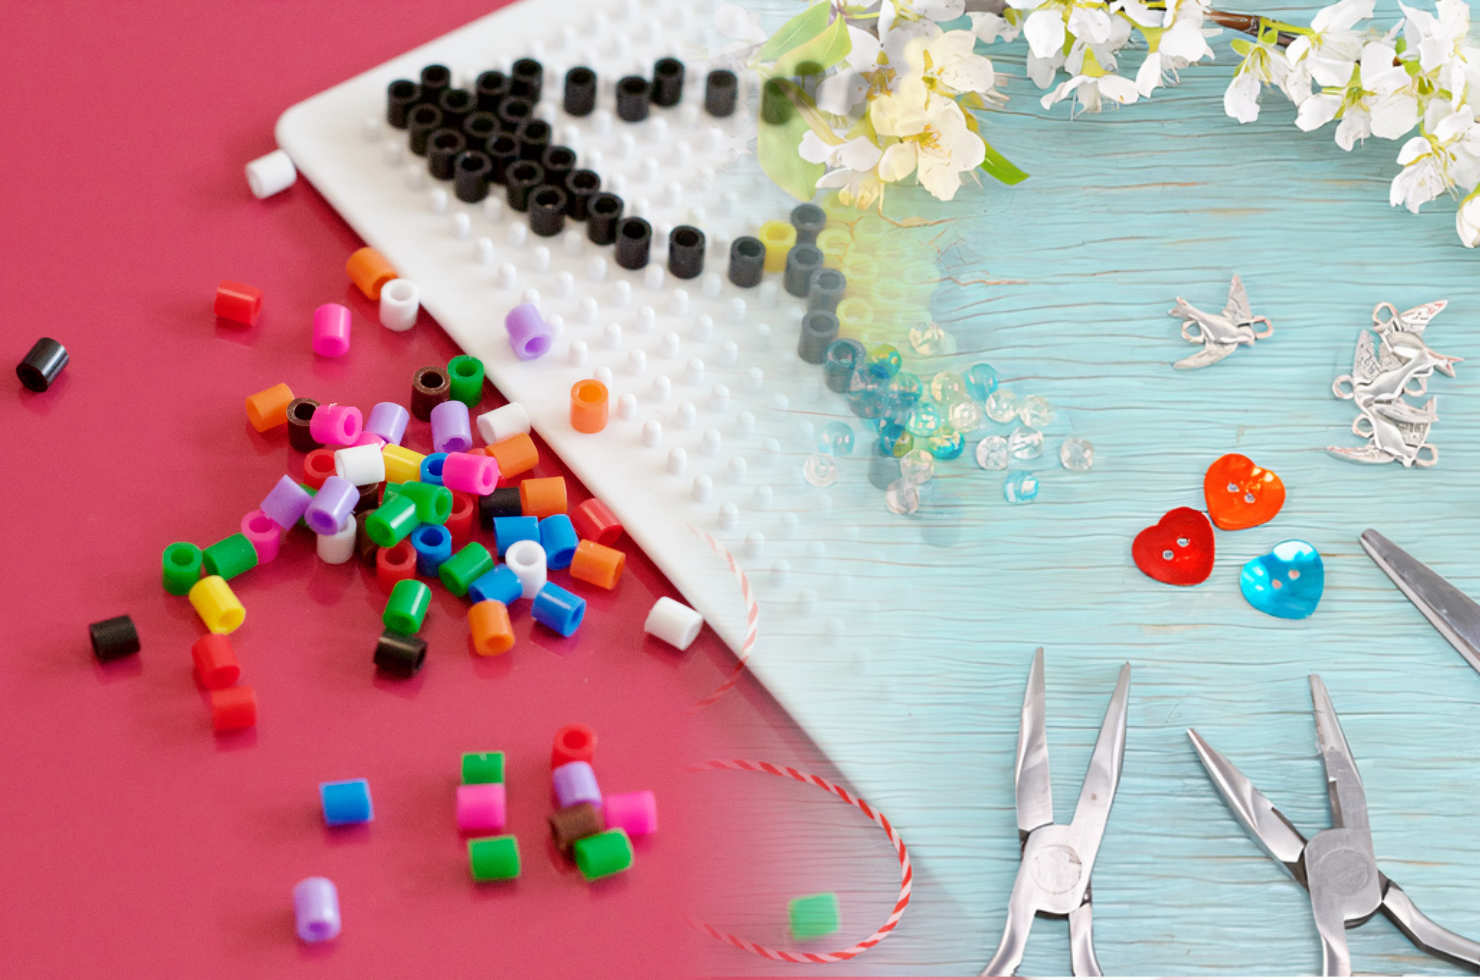 taller de macrame y hama beads